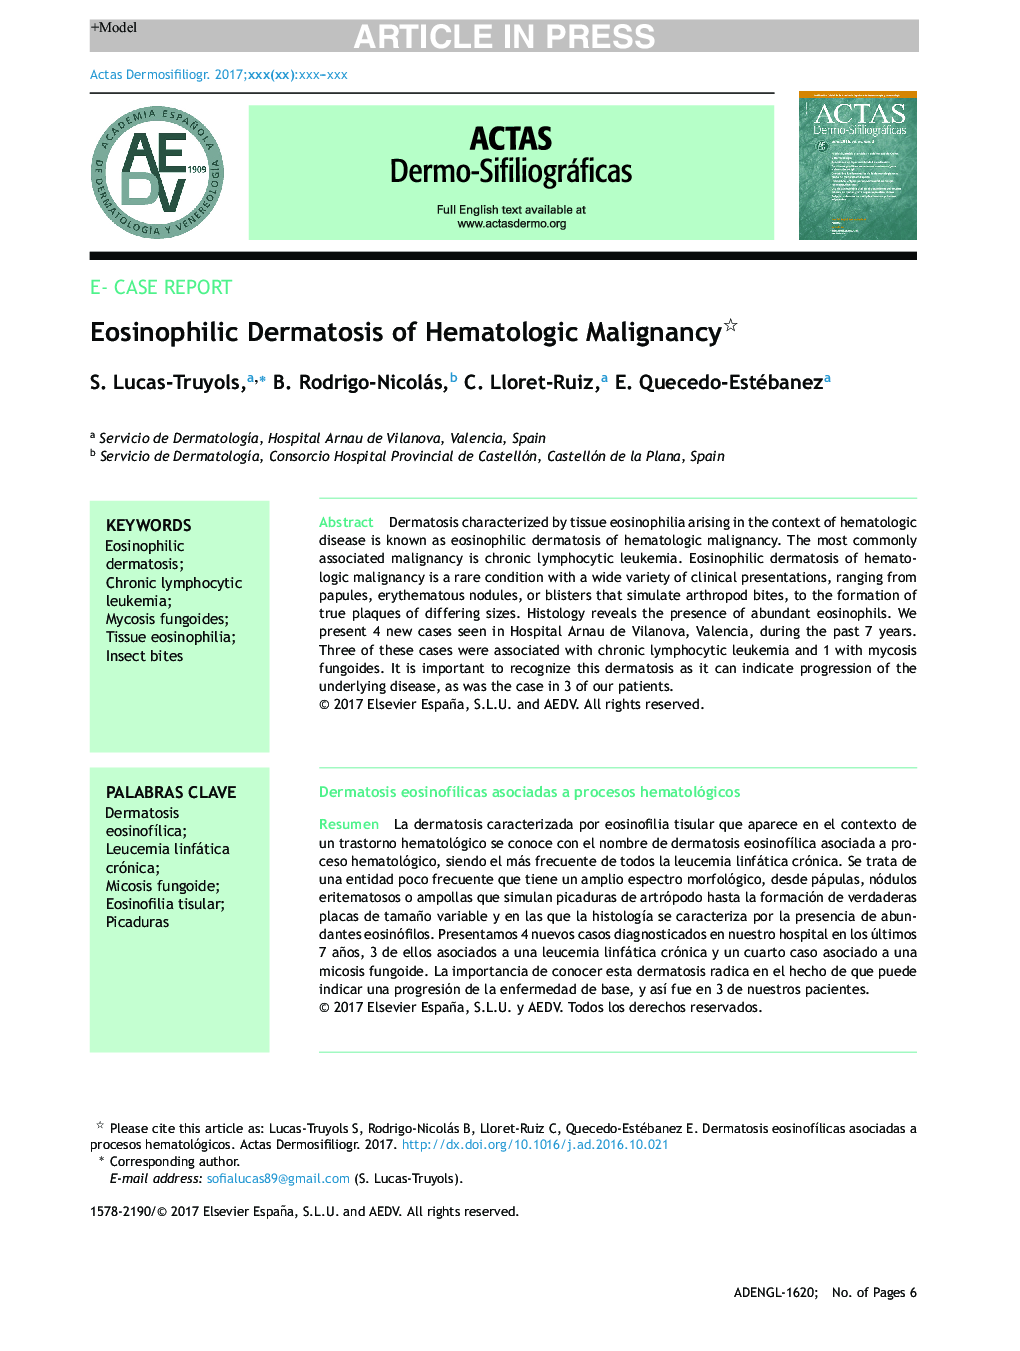 Eosinophilic Dermatosis of Hematologic Malignancy